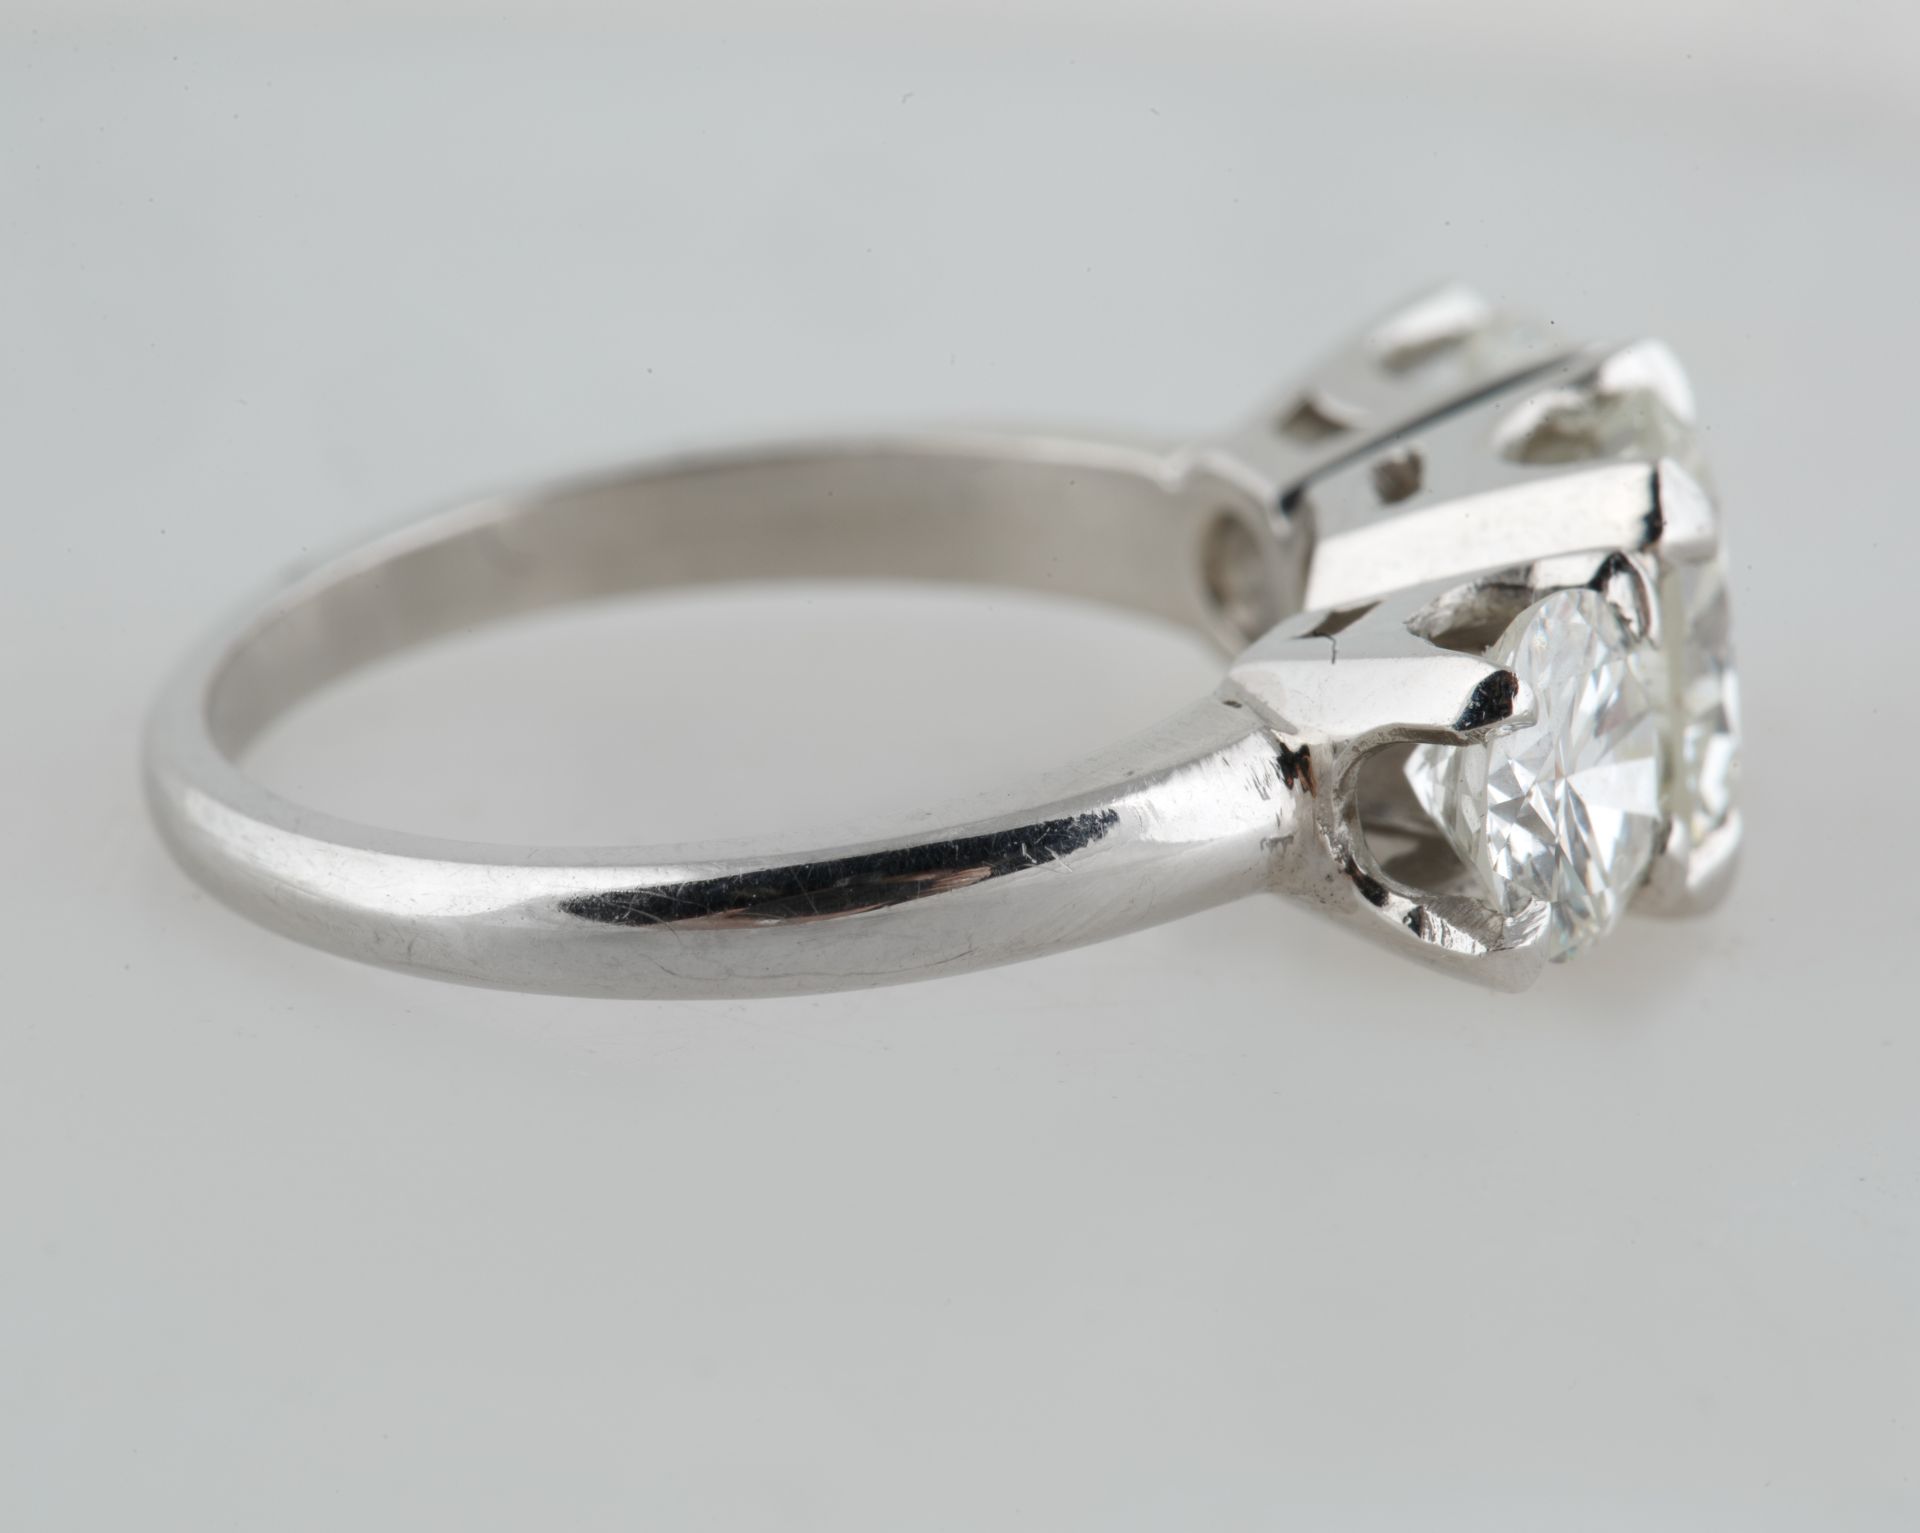 A 2.8 CT TRIPLE BRILLIANT ROUND-CUT DIAMOND RING SET IN PLATINUM - Image 2 of 5